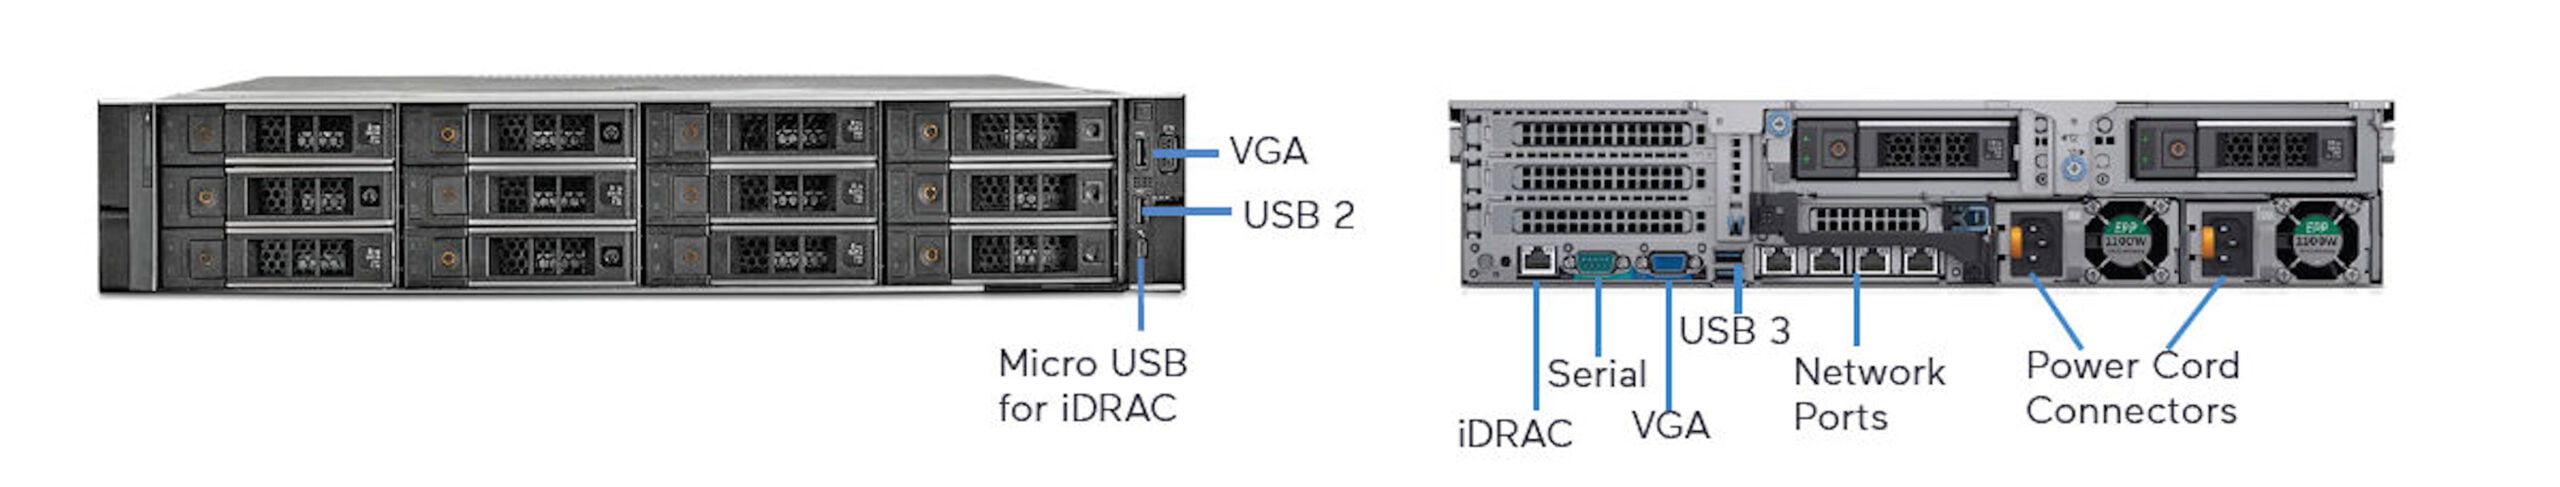 VERA-2H230S-N02 Valerus Shadow Elite RAID Recording Servers